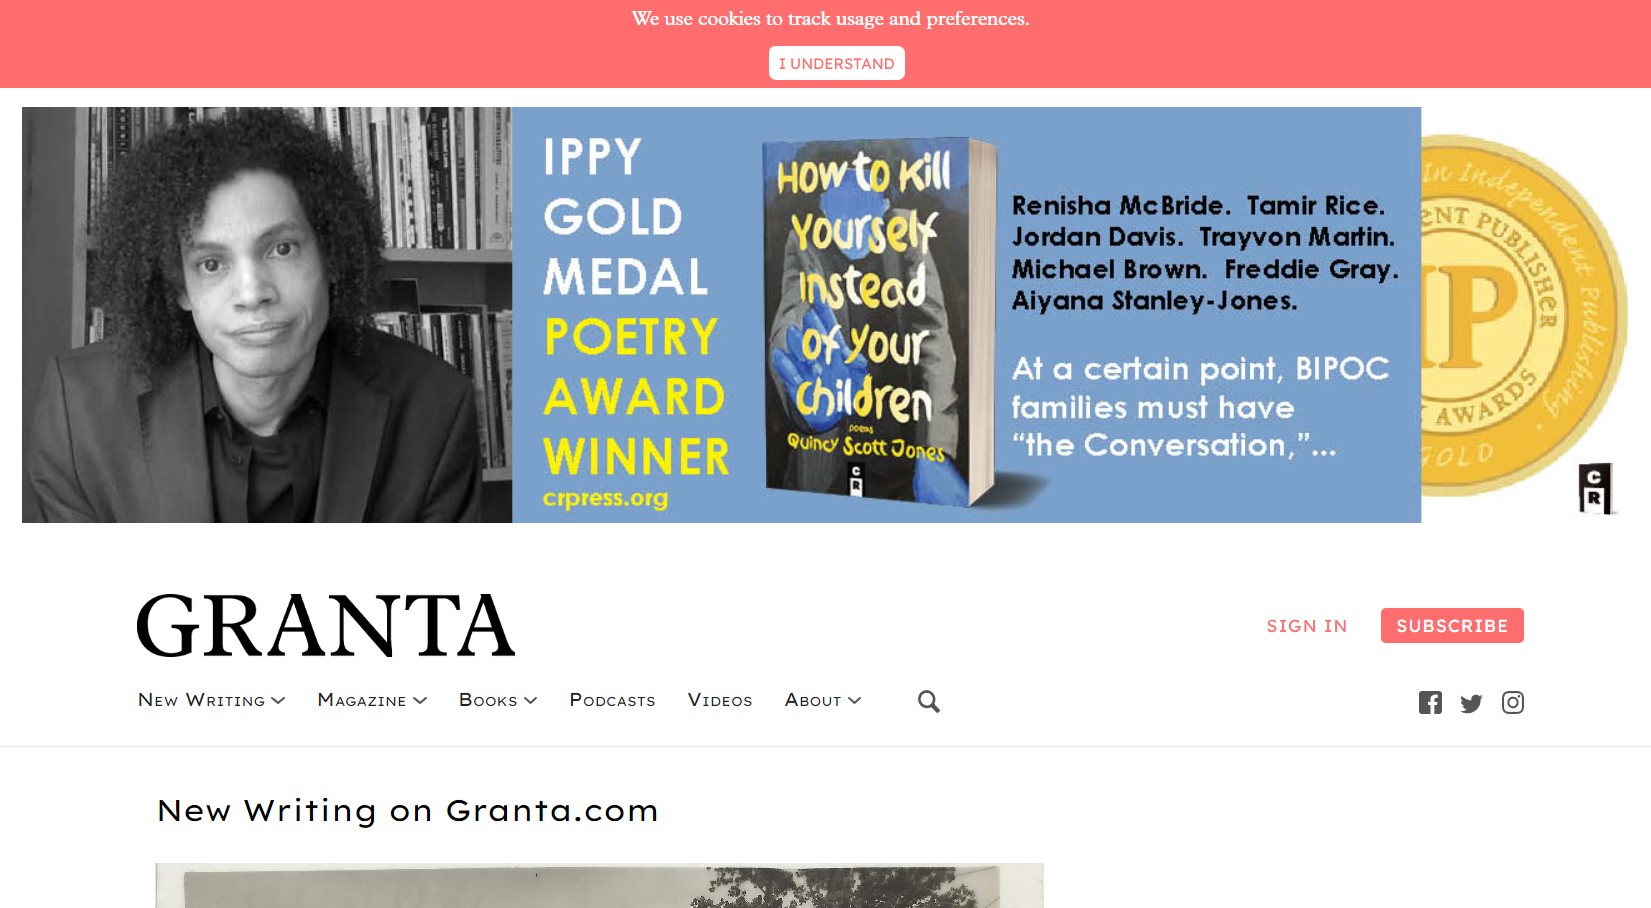 literary critic websites